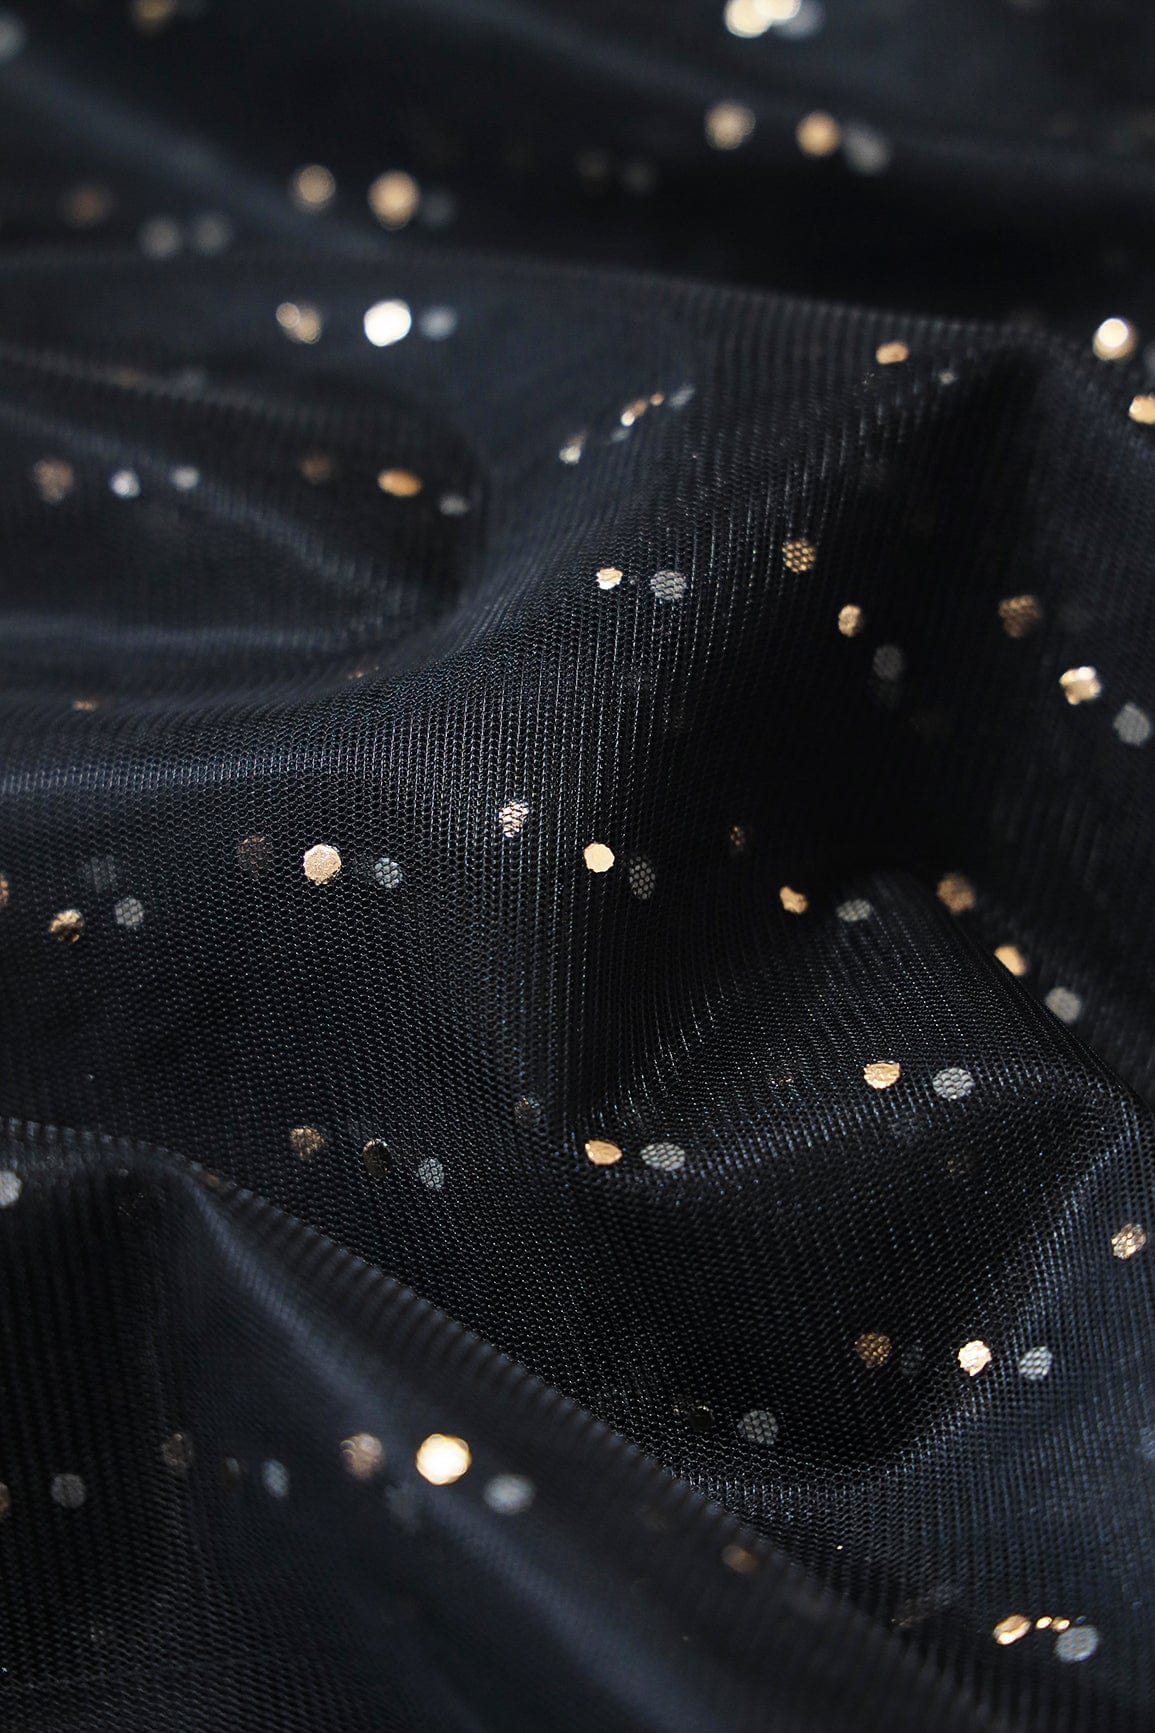 Mukaish Work On Black Soft Net Fabric - doeraa